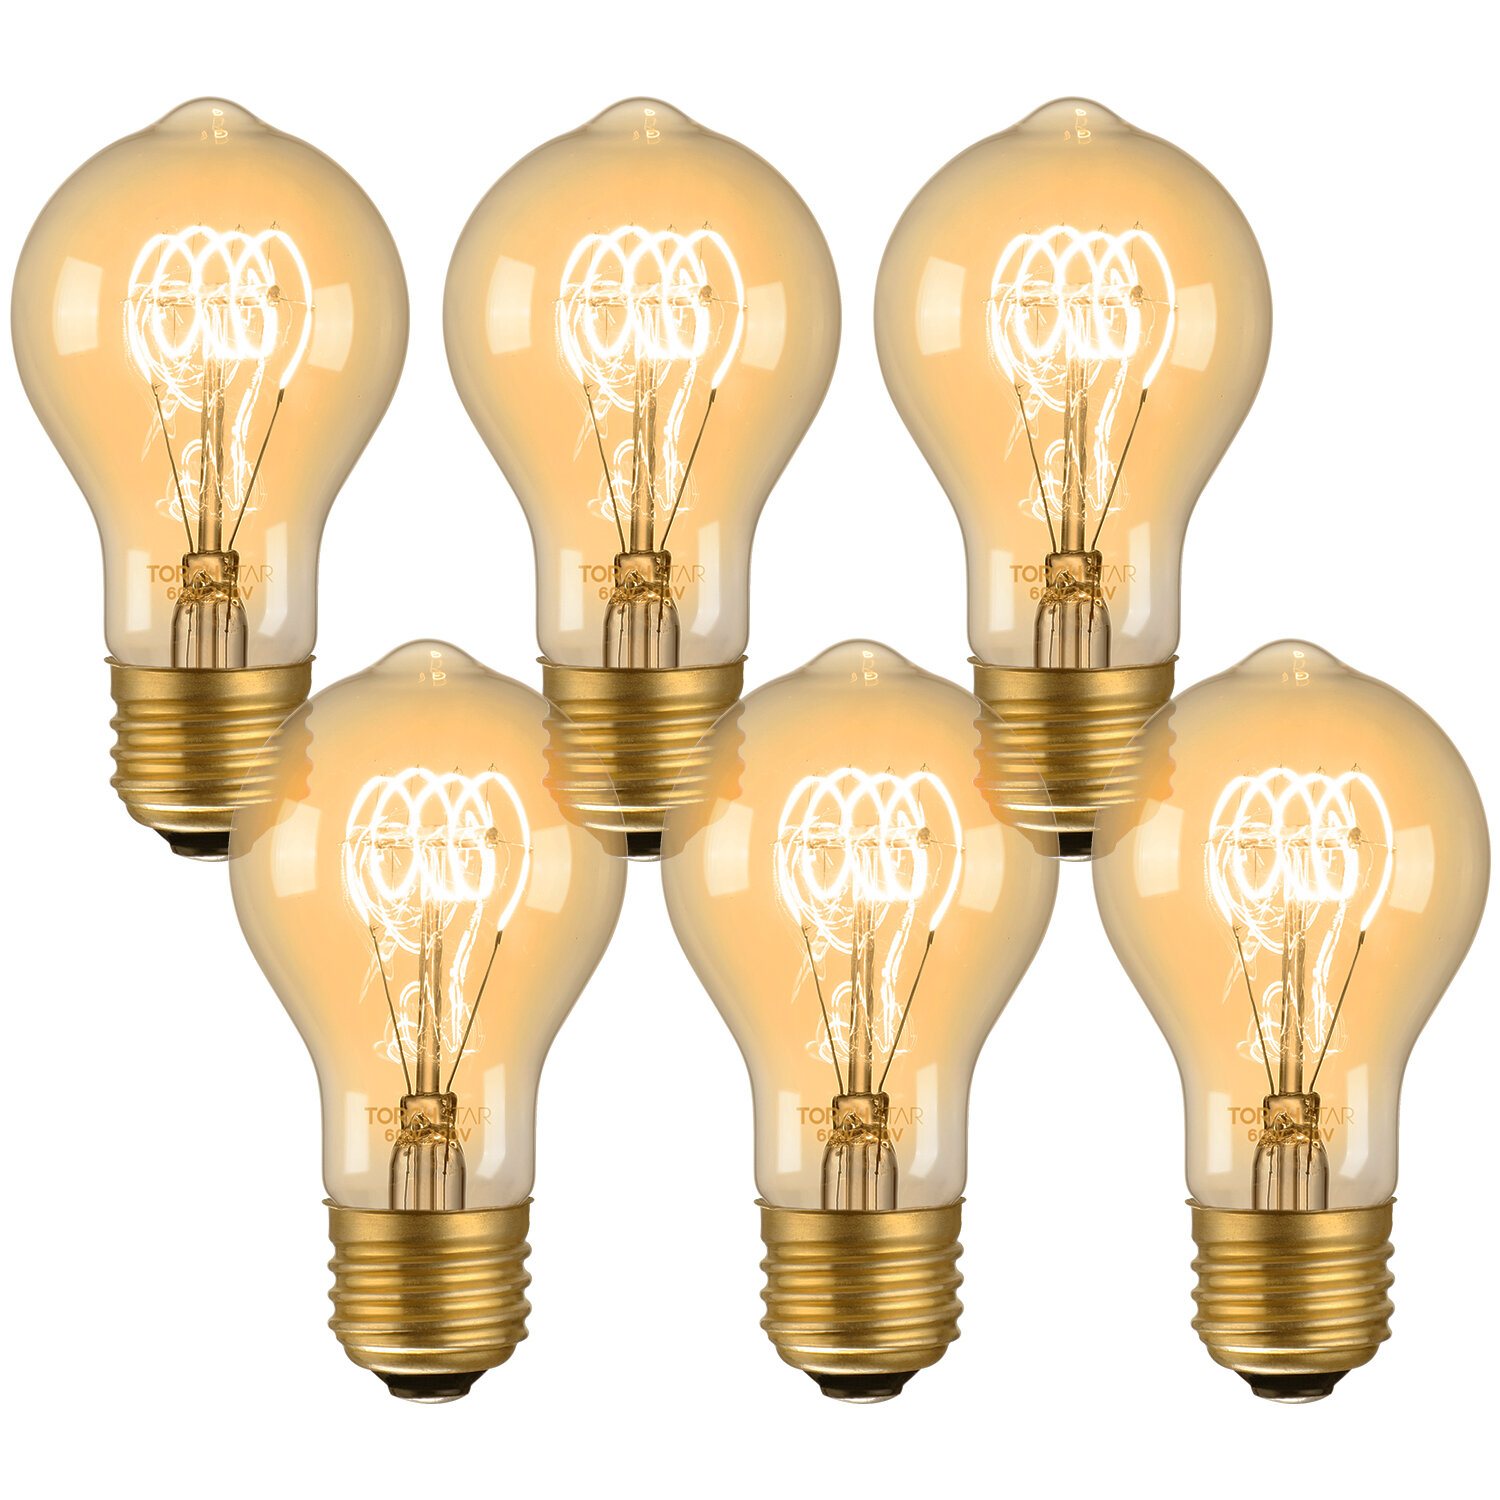 4 X 40W Vintage Industrial Filament Light Bulb E27-G80 Squirrel Cage Edison Bulb 